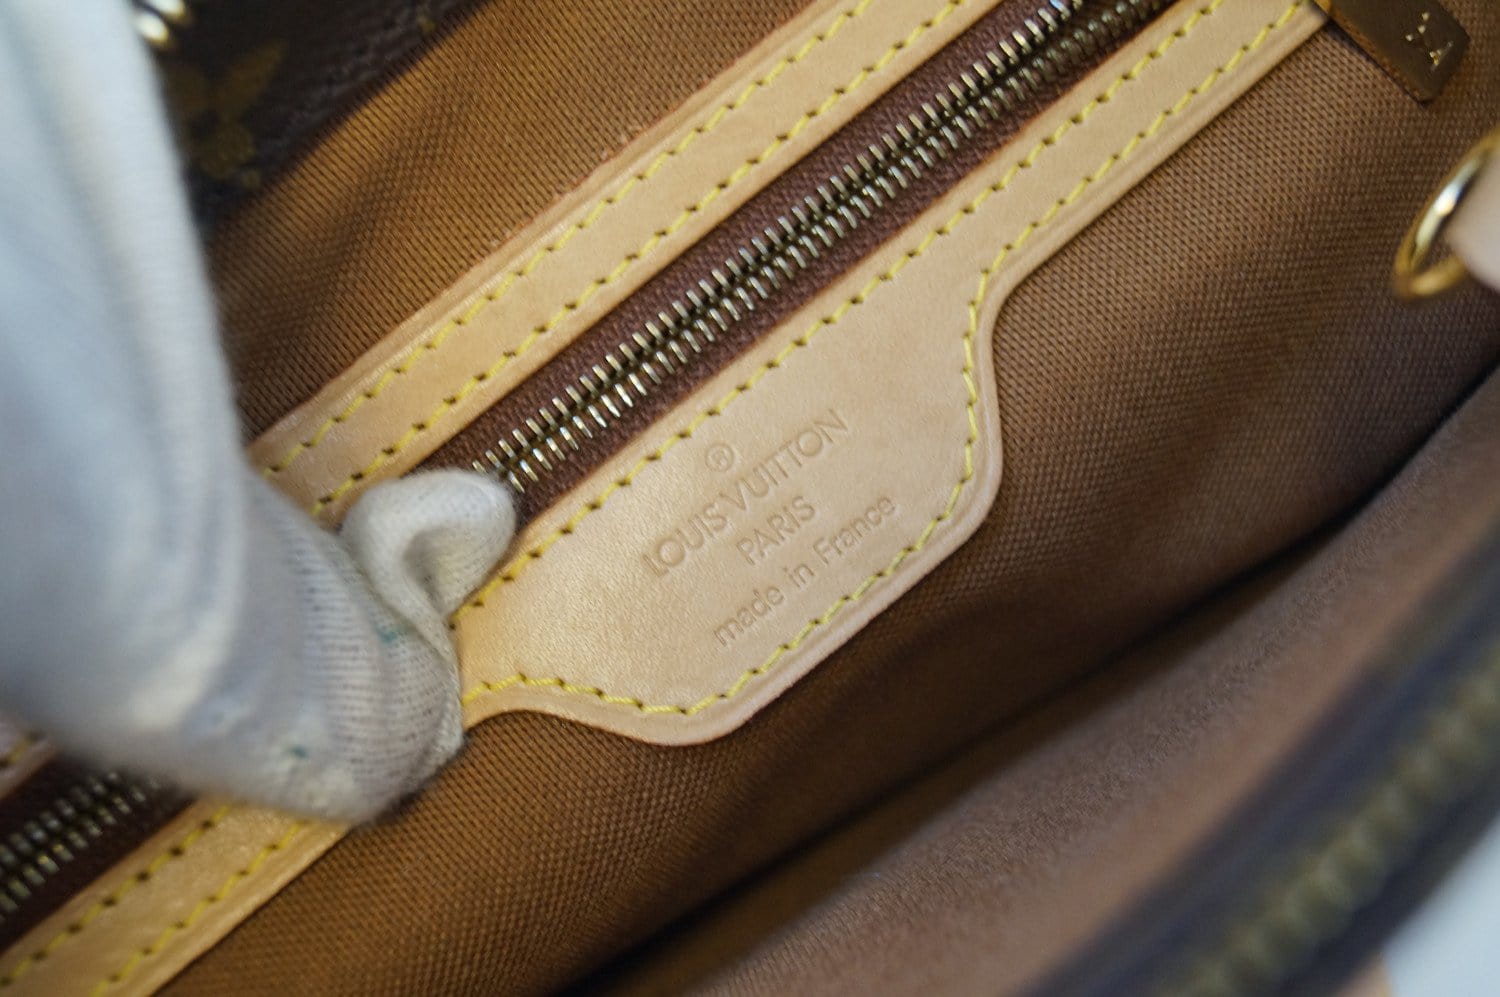 Louis Vuitton Concorde cloth handbag - ShopStyle Tote Bags